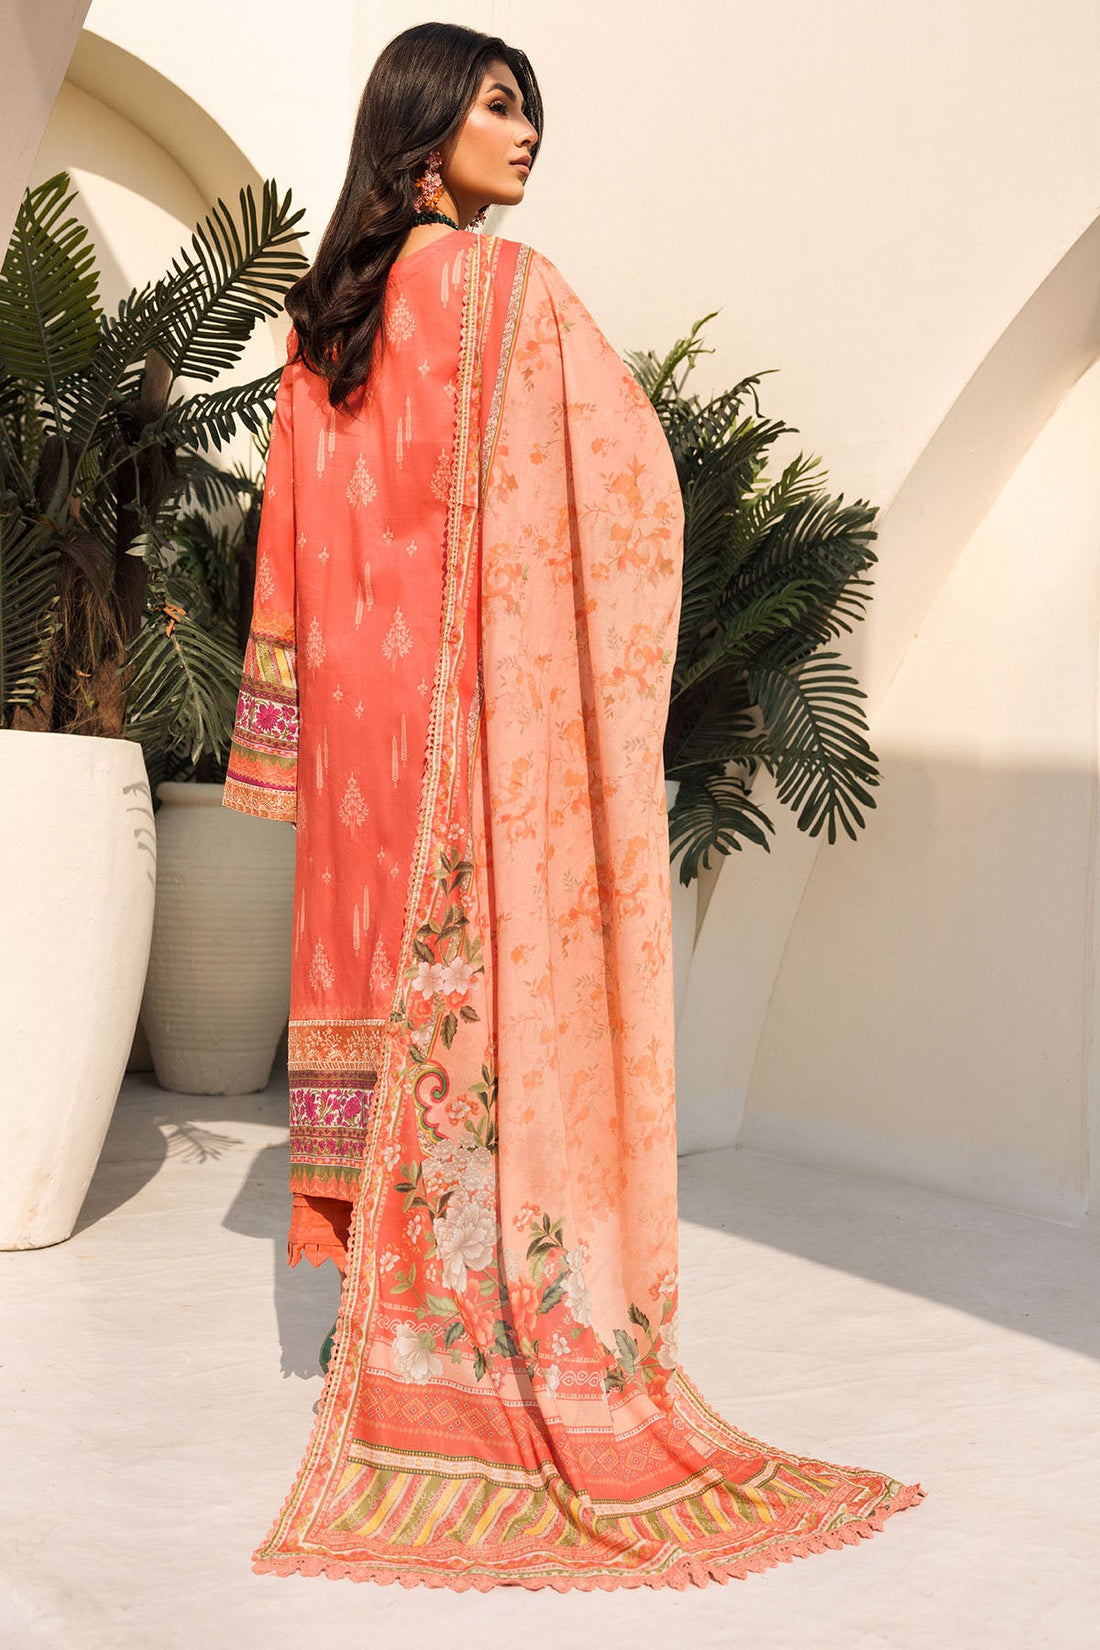 Motifz | Umang Luxury Lawn | A-03 - Khanumjan  Pakistani Clothes and Designer Dresses in UK, USA 